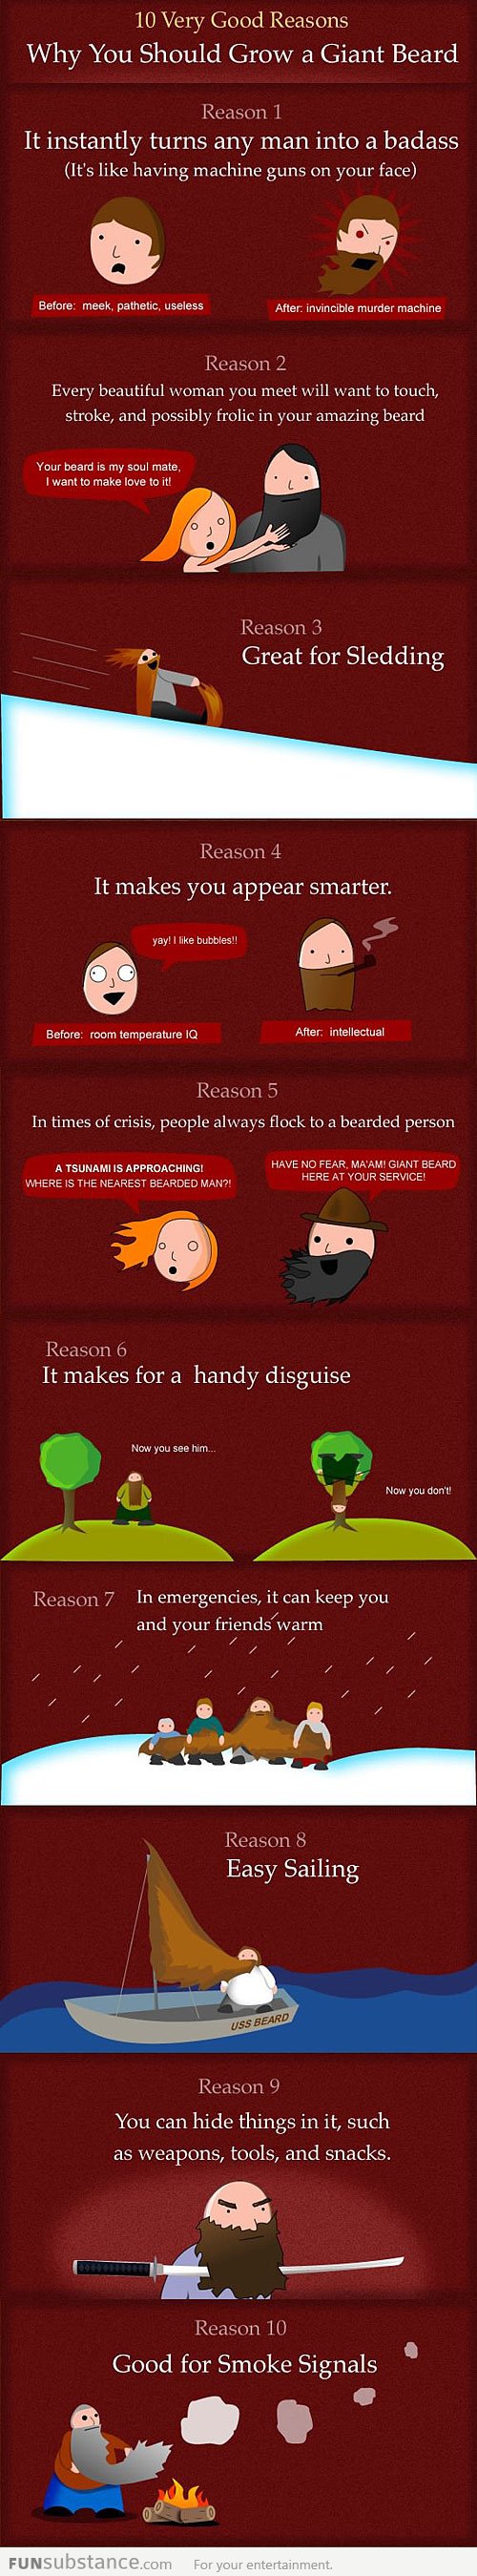 Reasons to grow a giant beard